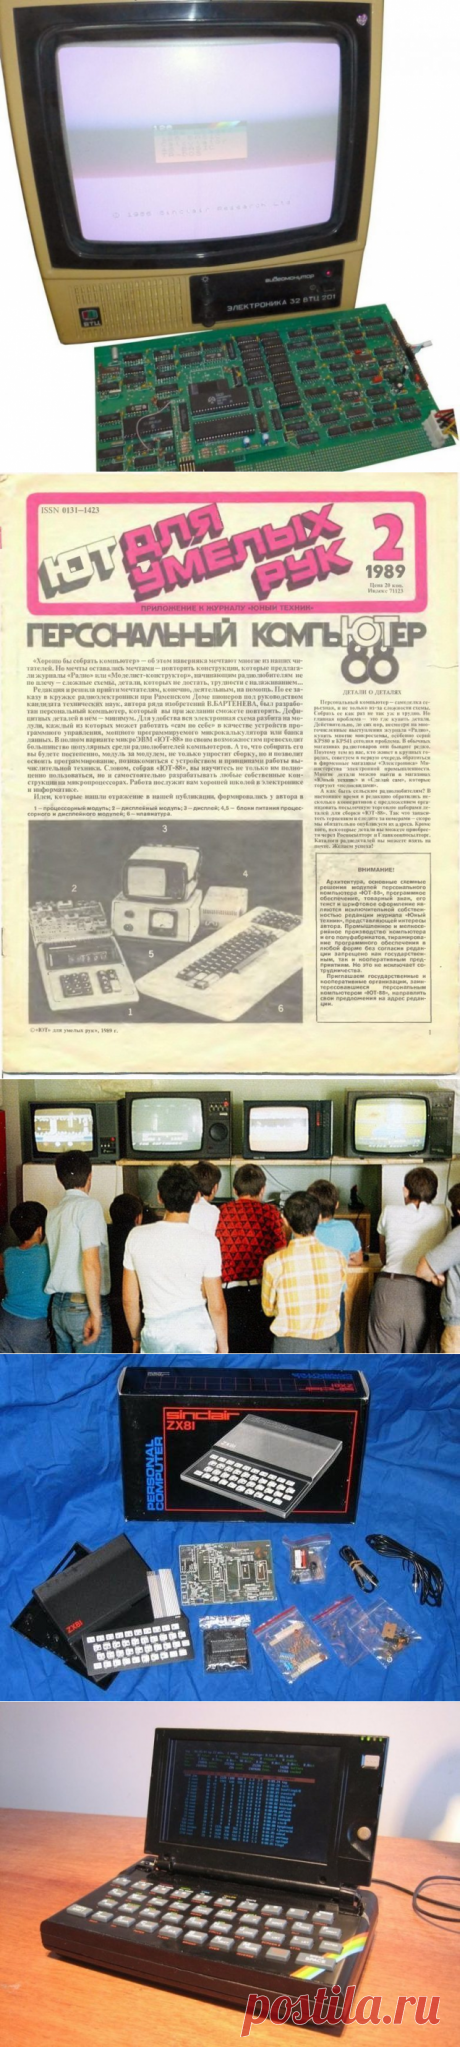 Как ZX Spectrum покорил СССР / Назад в СССР / Back in USSR